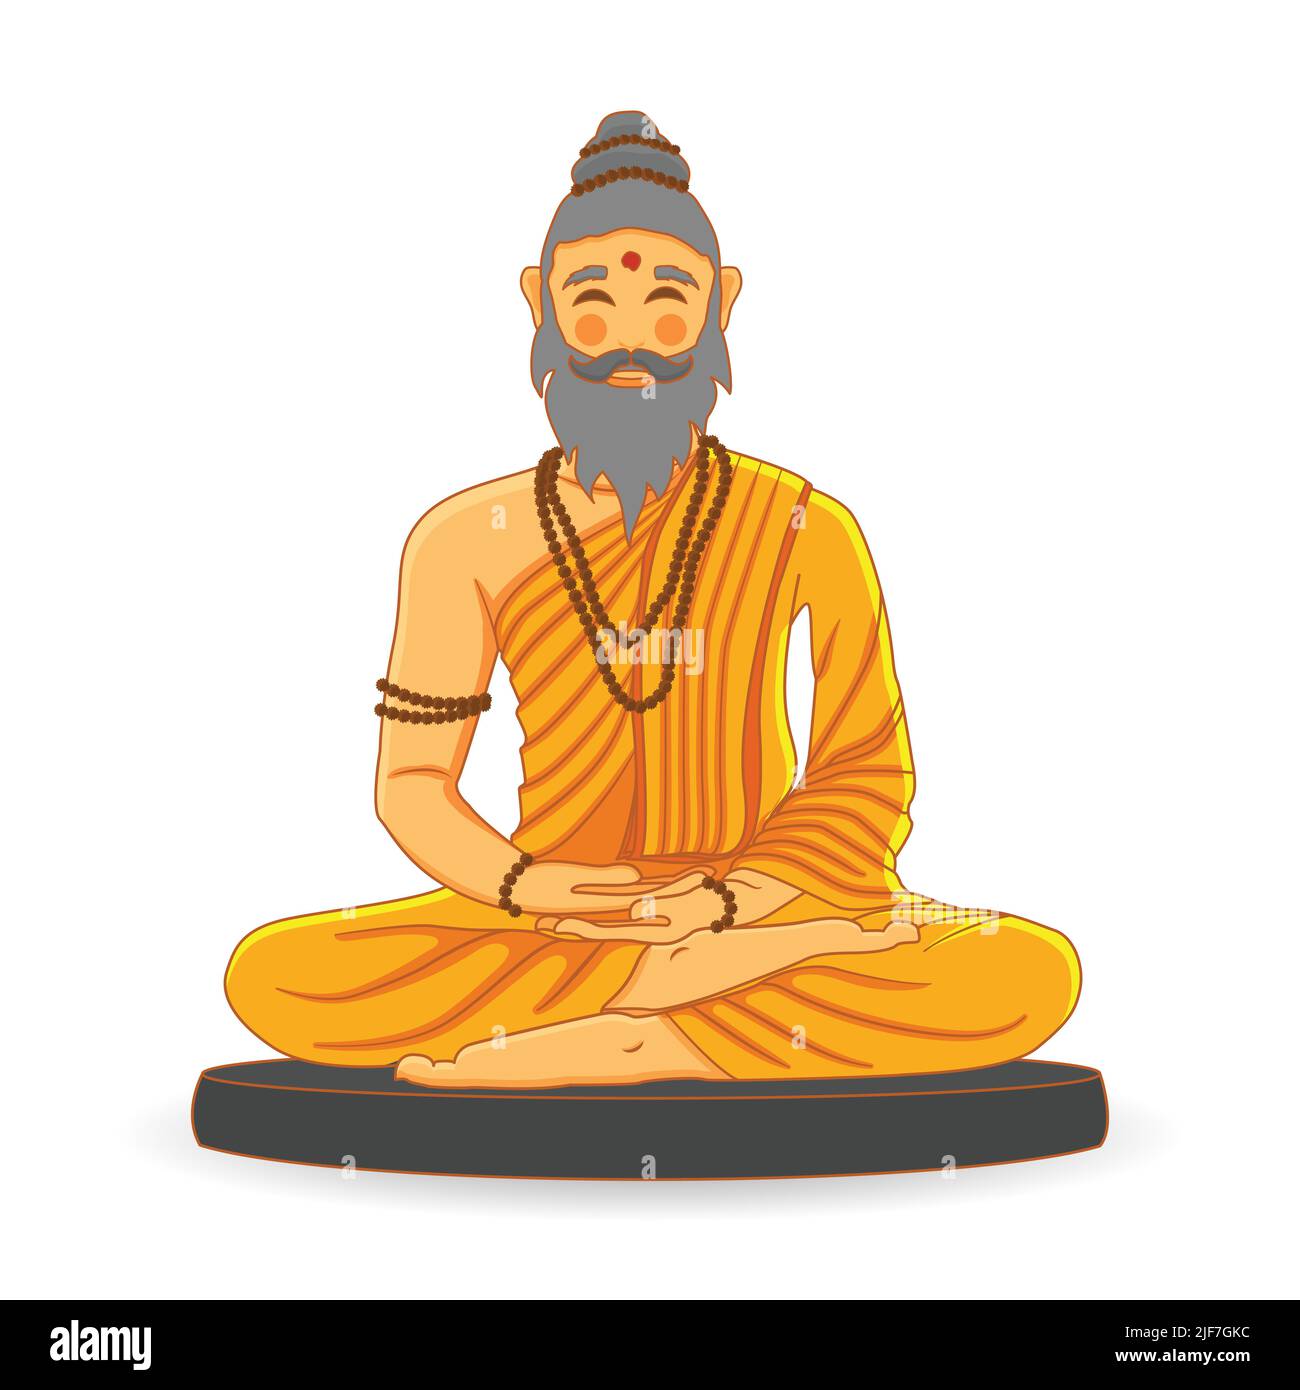 https://c8.alamy.com/comp/2JF7GKC/guru-ascetic-sage-sadhu-saint-monk-yogi-meditating-concentrating-traditional-saffron-orange-clothes-sitting-in-yoga-pose-with-rudraksha-beads-2JF7GKC.jpg